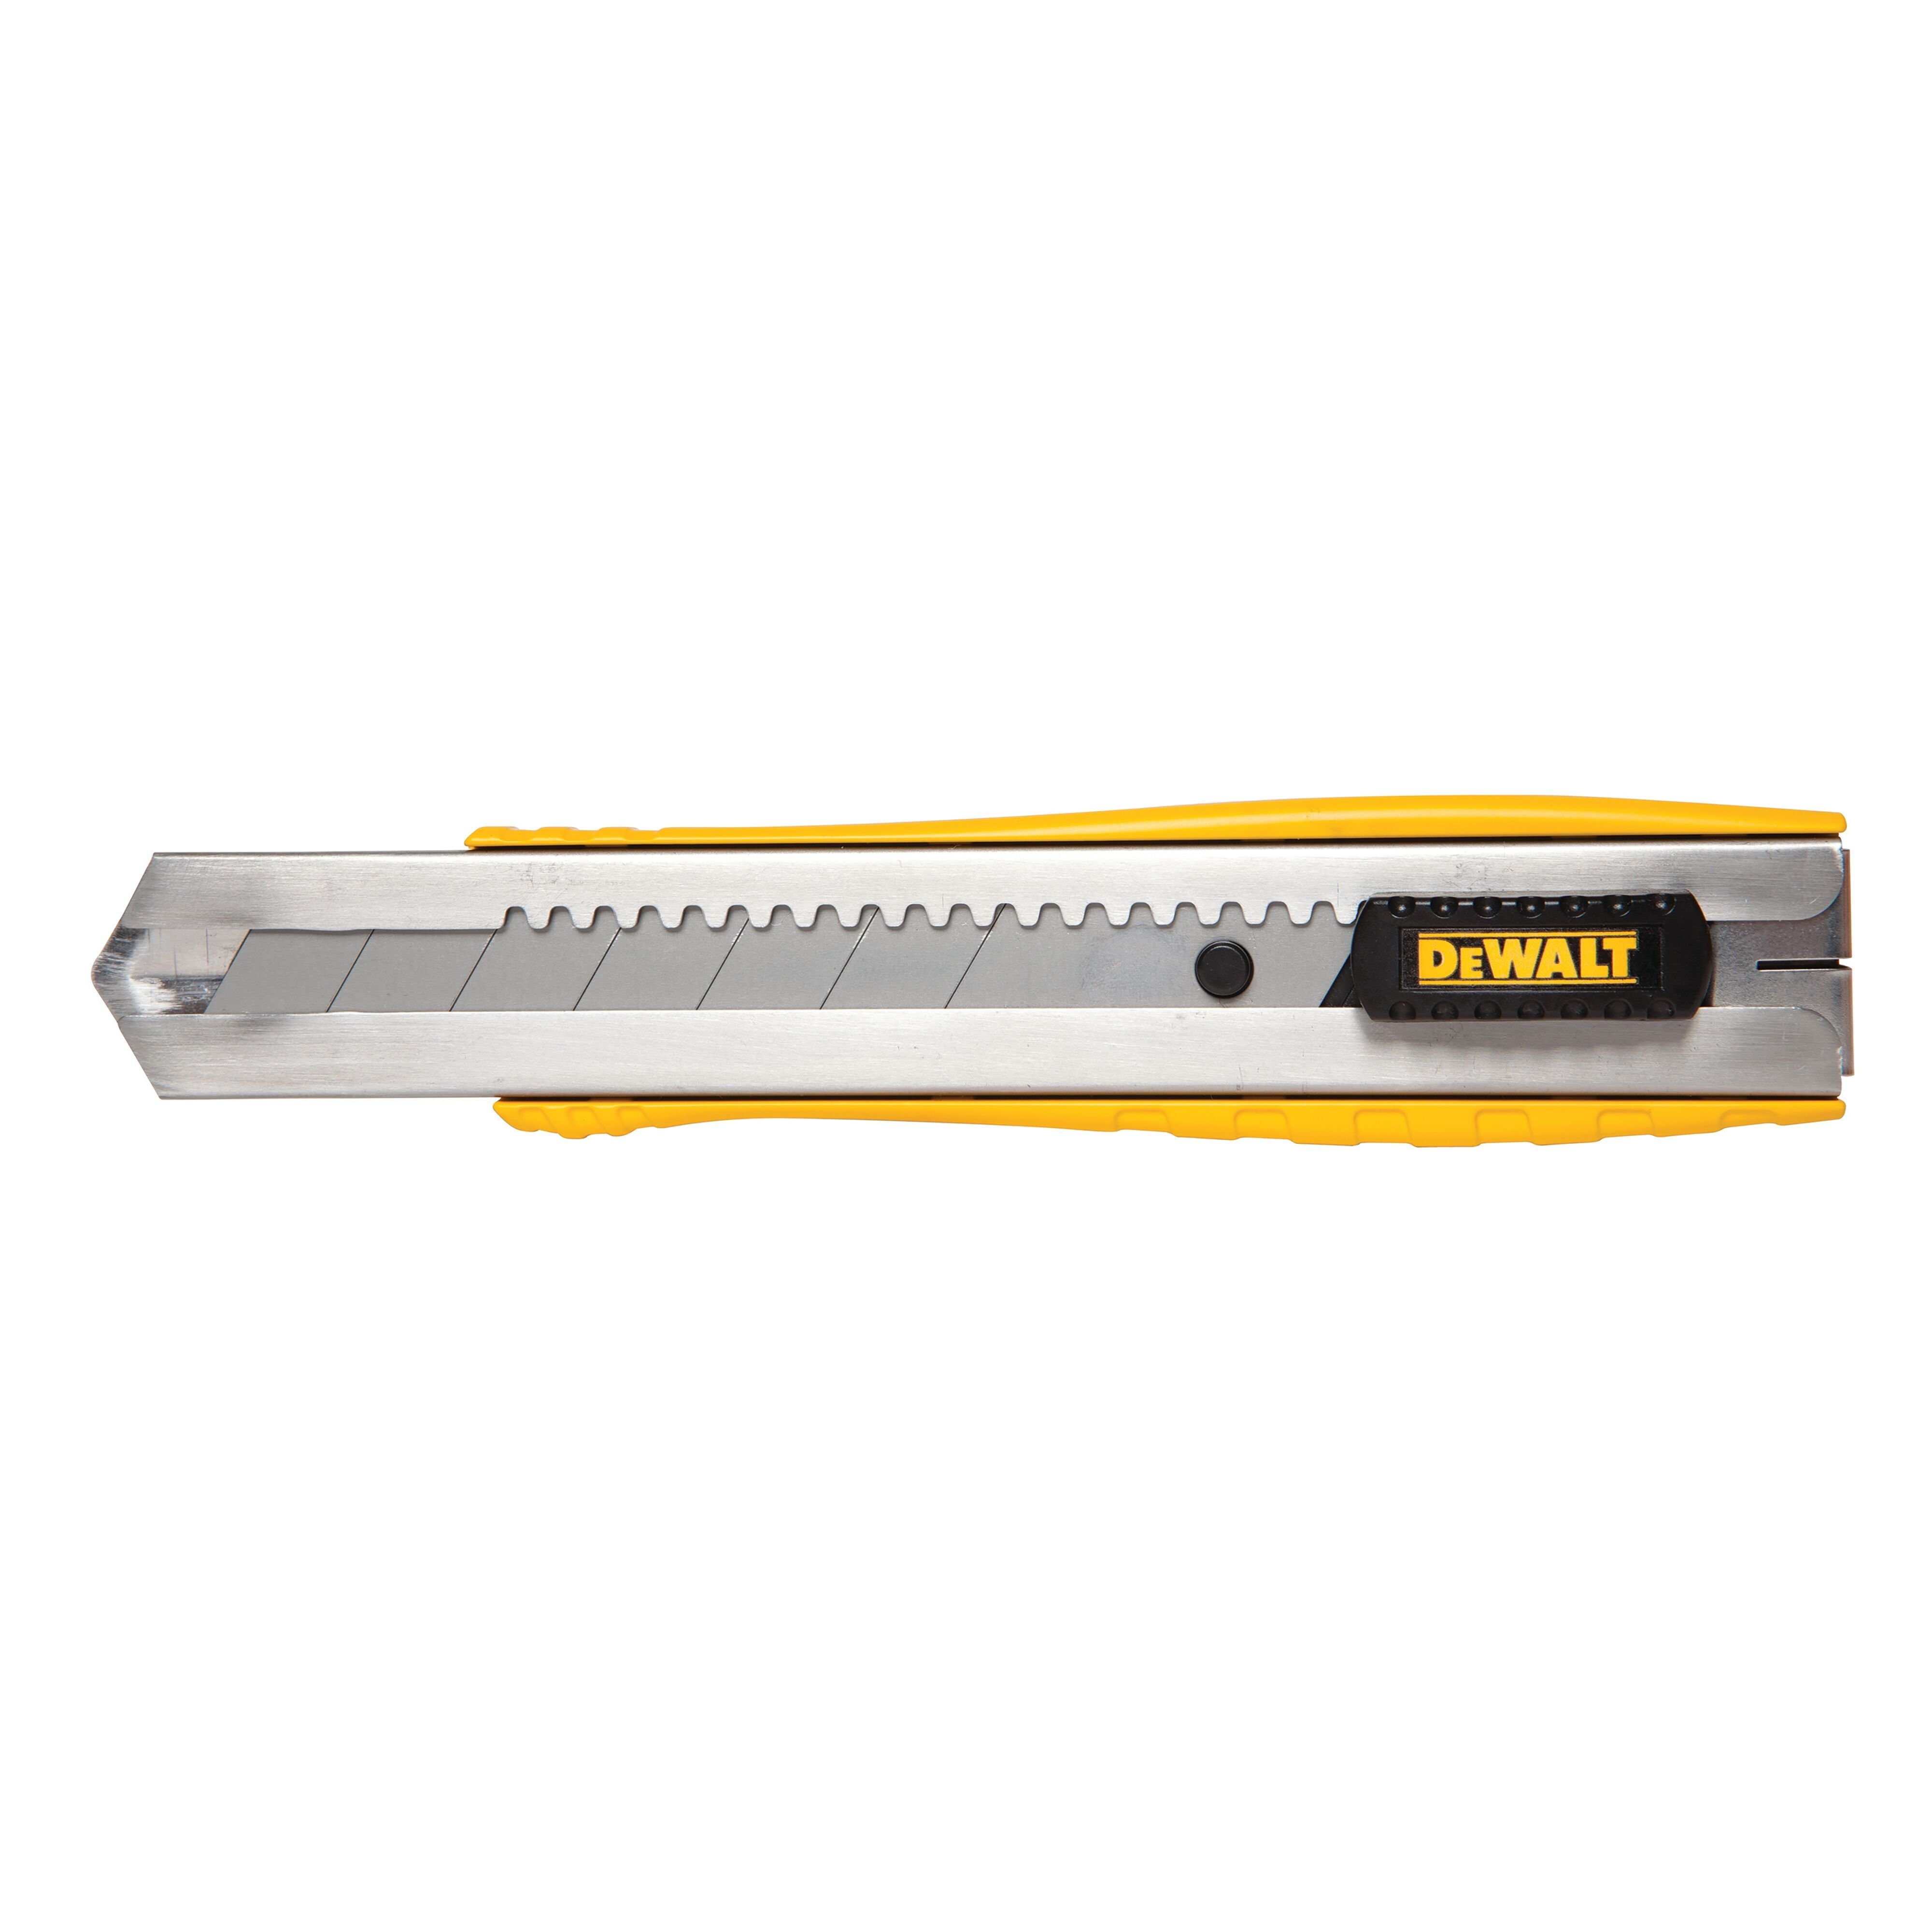 DeWalt Cuttermesser DWHT10045-0 Cutter mit Abbrechklinge, 25mm